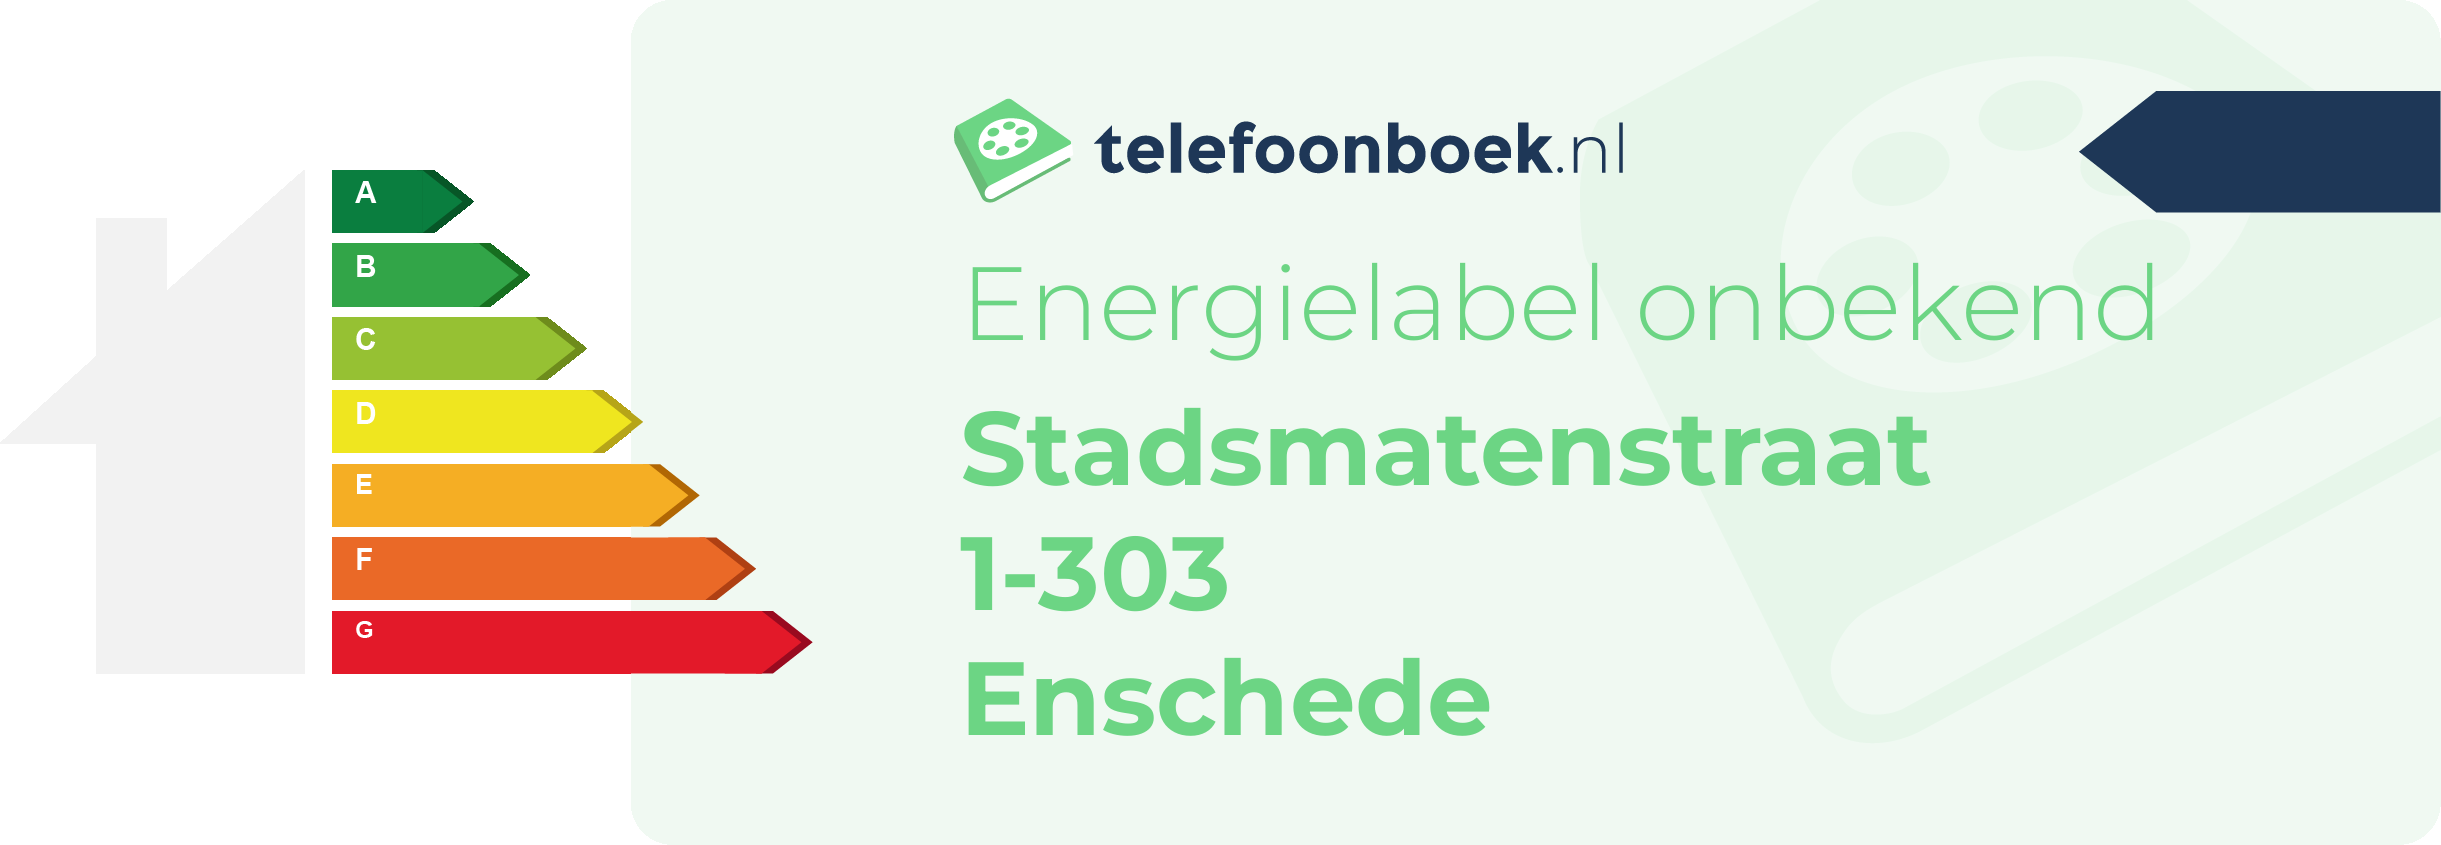 Energielabel Stadsmatenstraat 1-303 Enschede